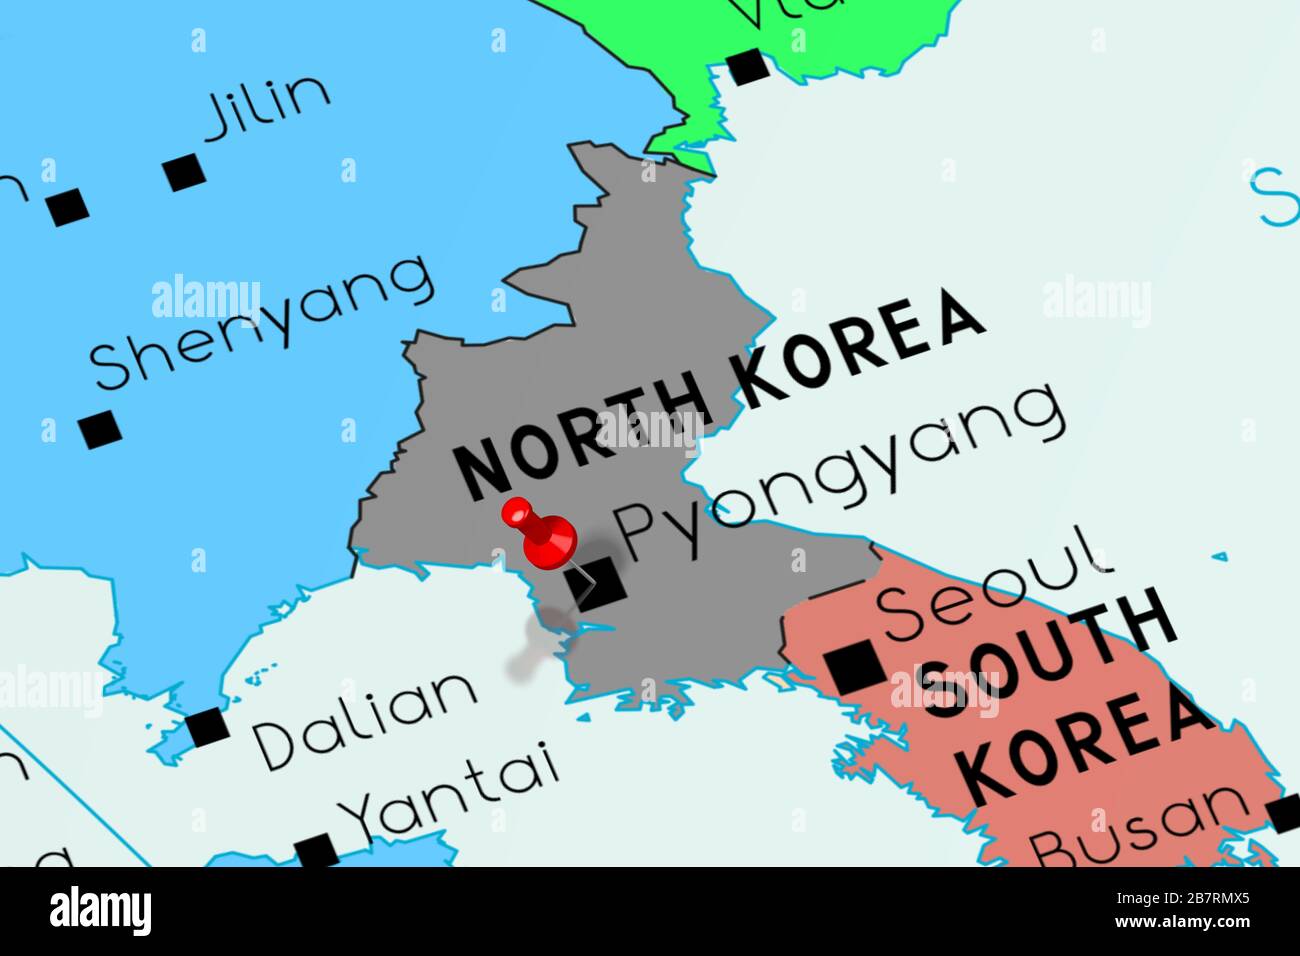 North Korea, Pyongyang - capital city, pinned on political map Stock Photo